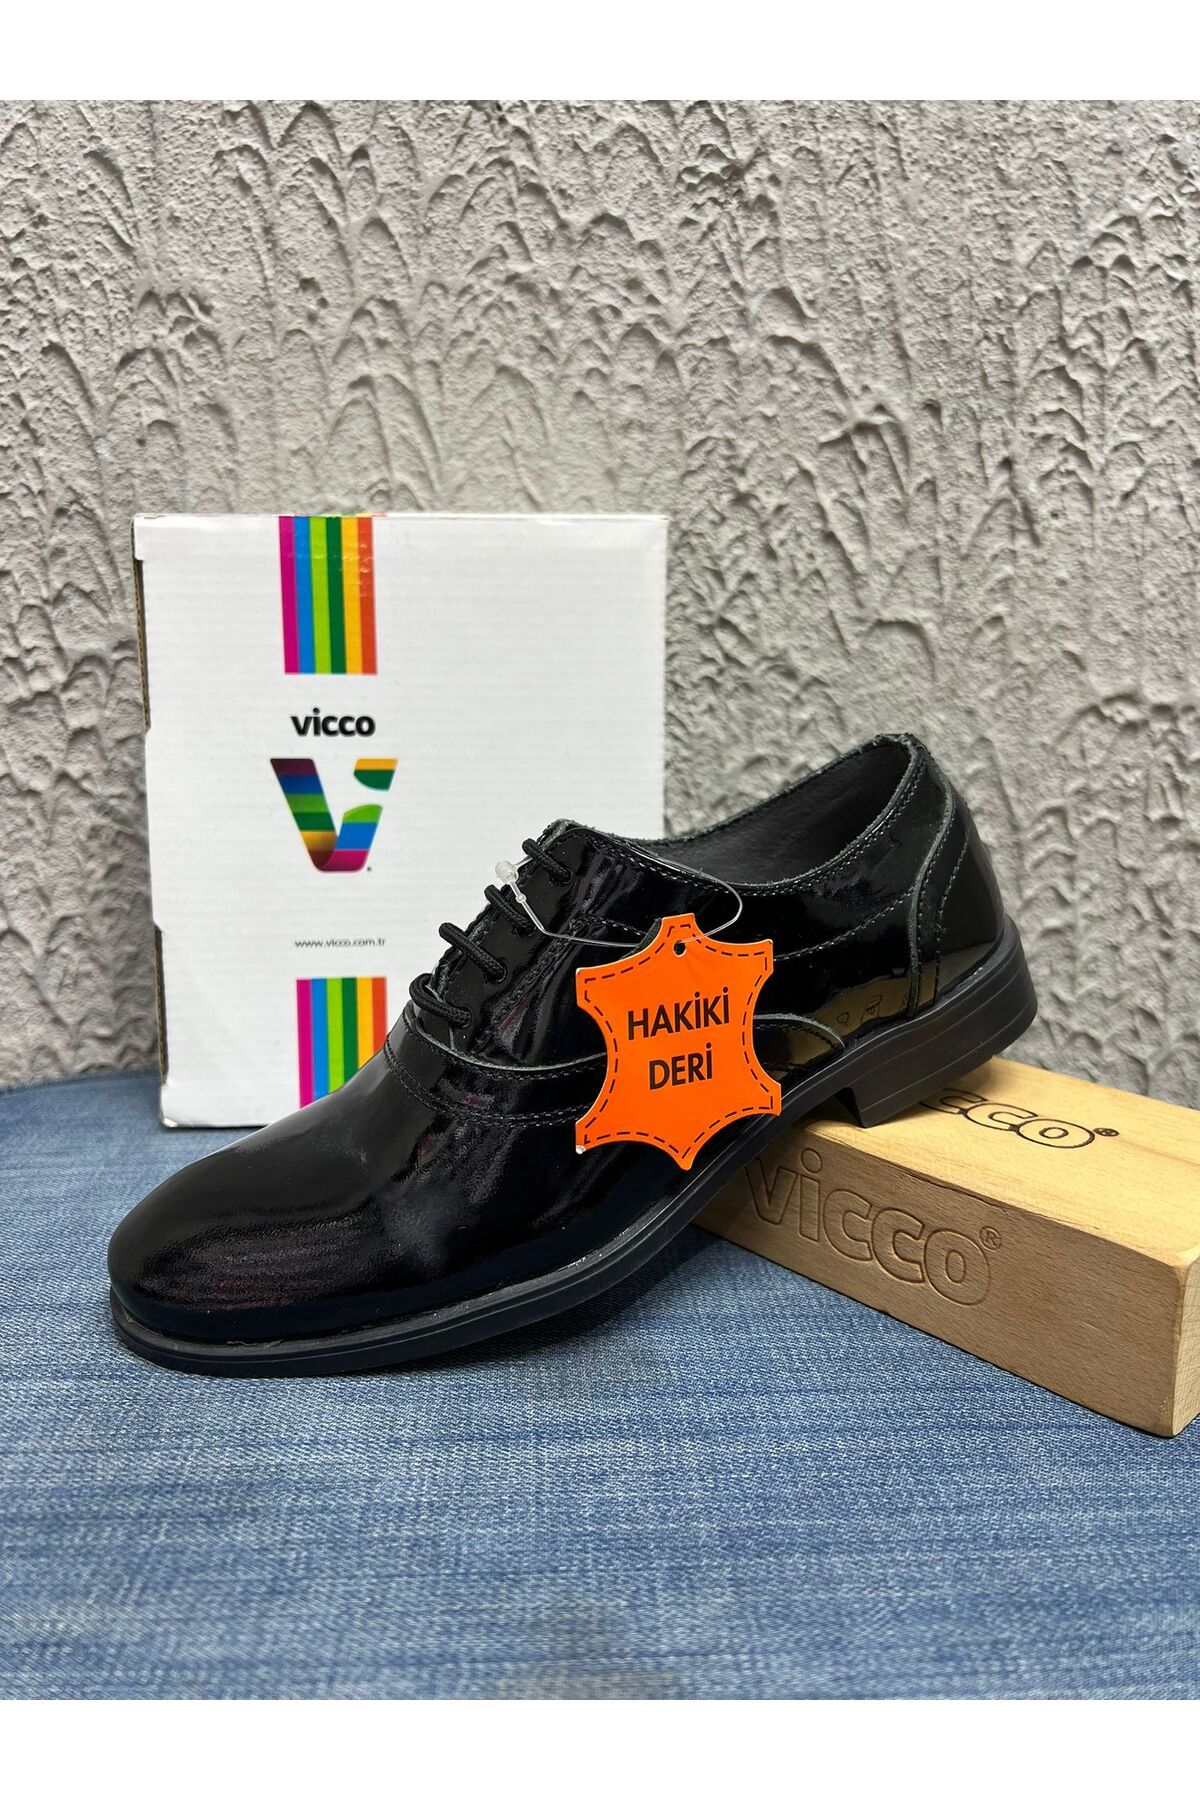 Vicco Parlak Deri Siyah Ayakkabı